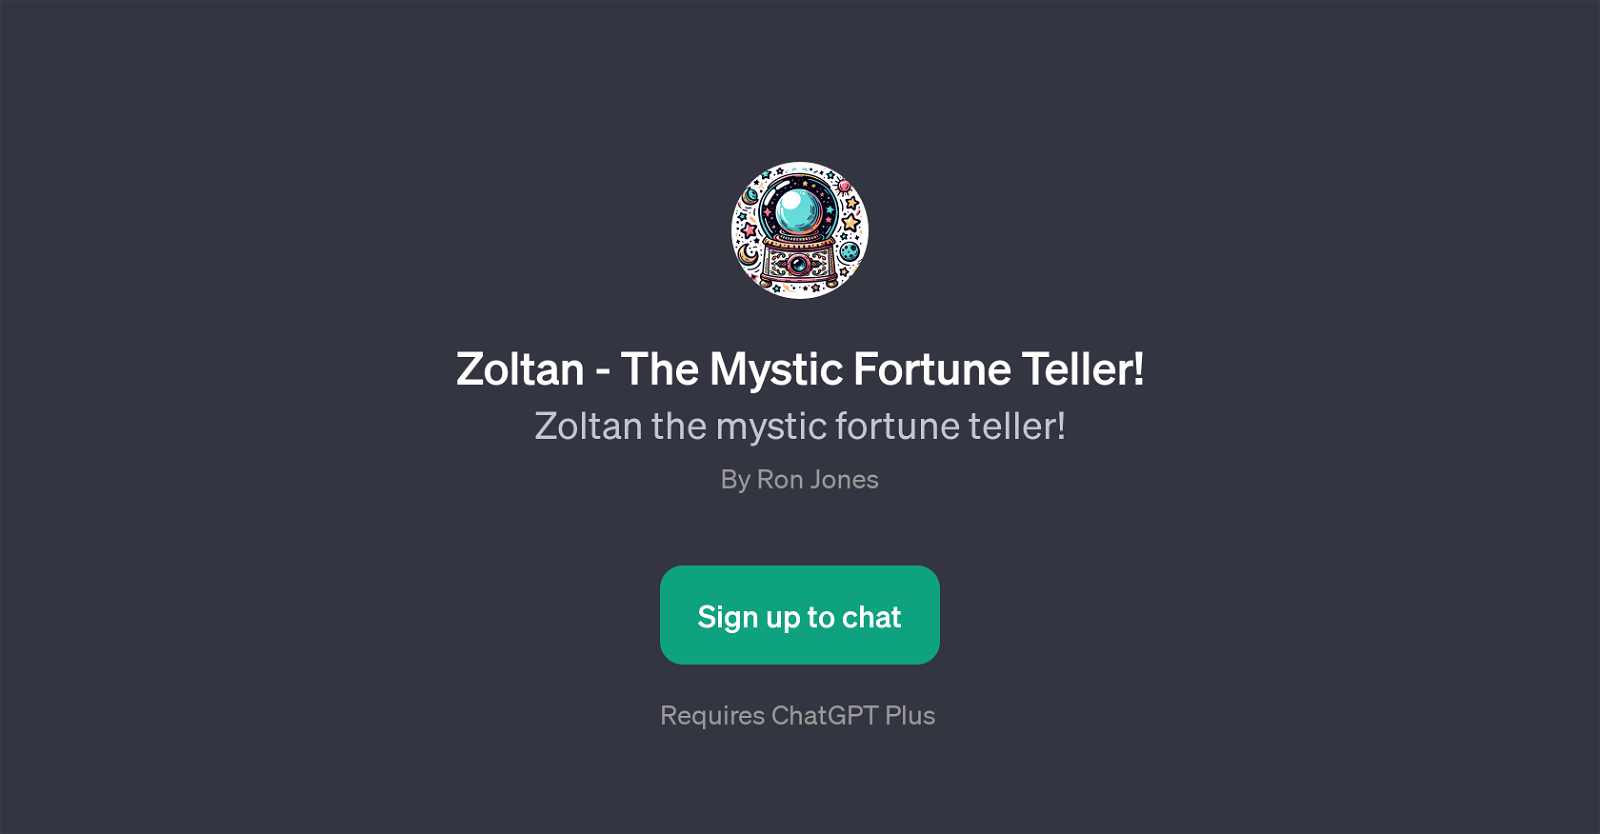 Zoltan - The Mystic Fortune Teller website